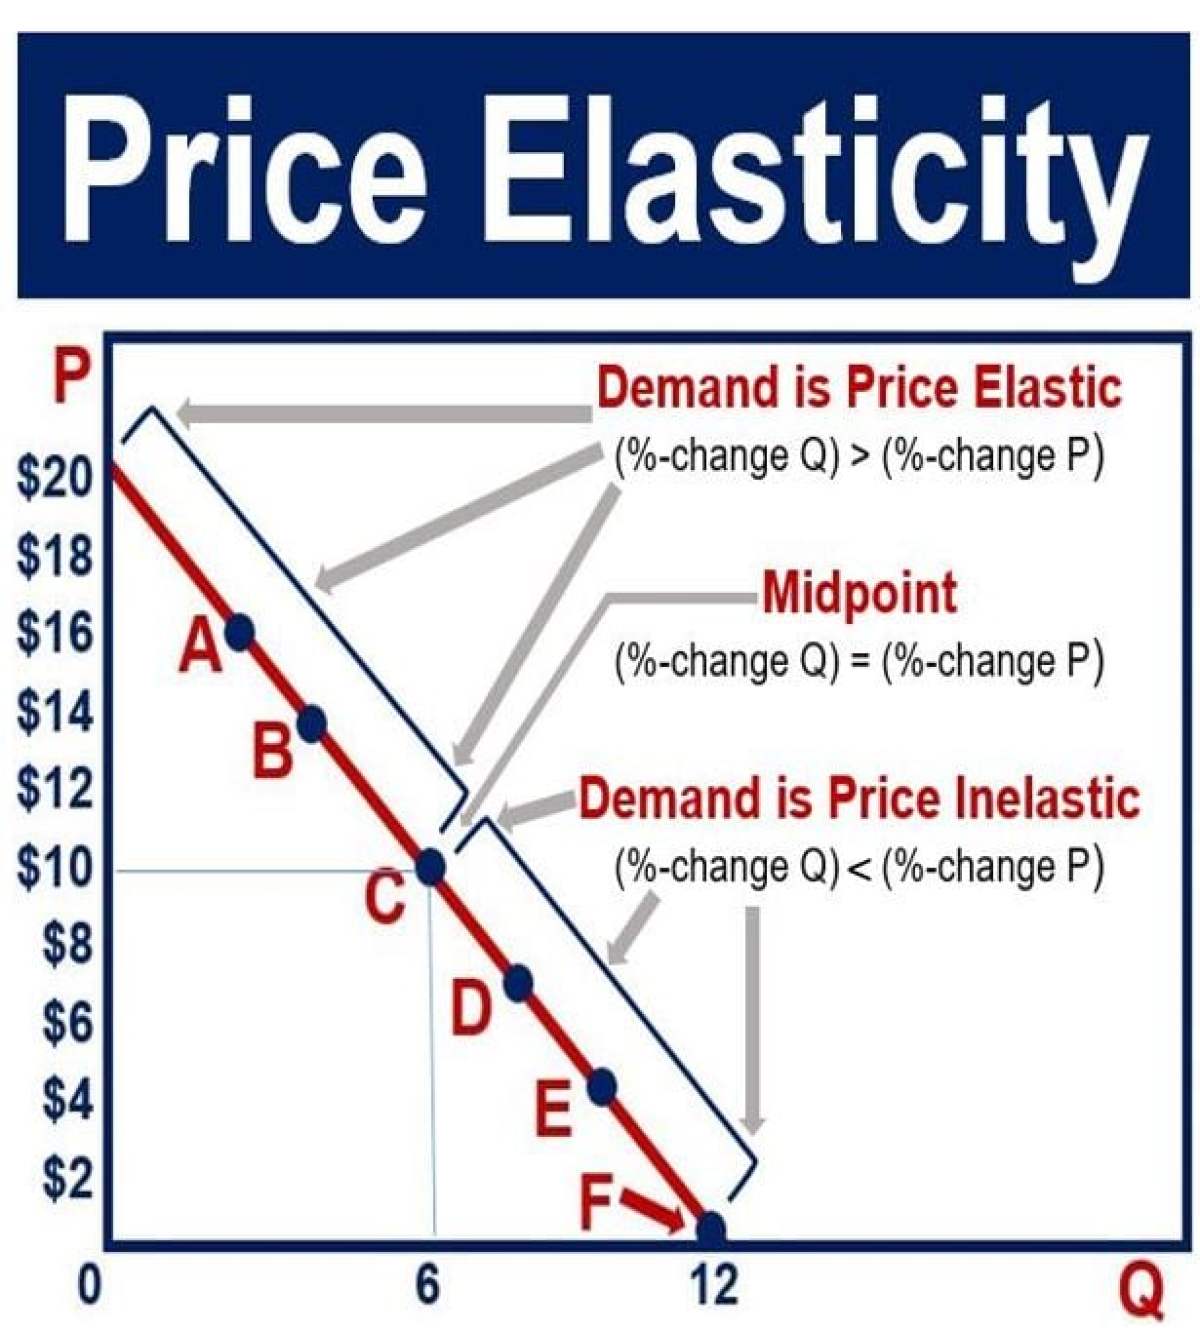 Price-elasticity-image.jpg